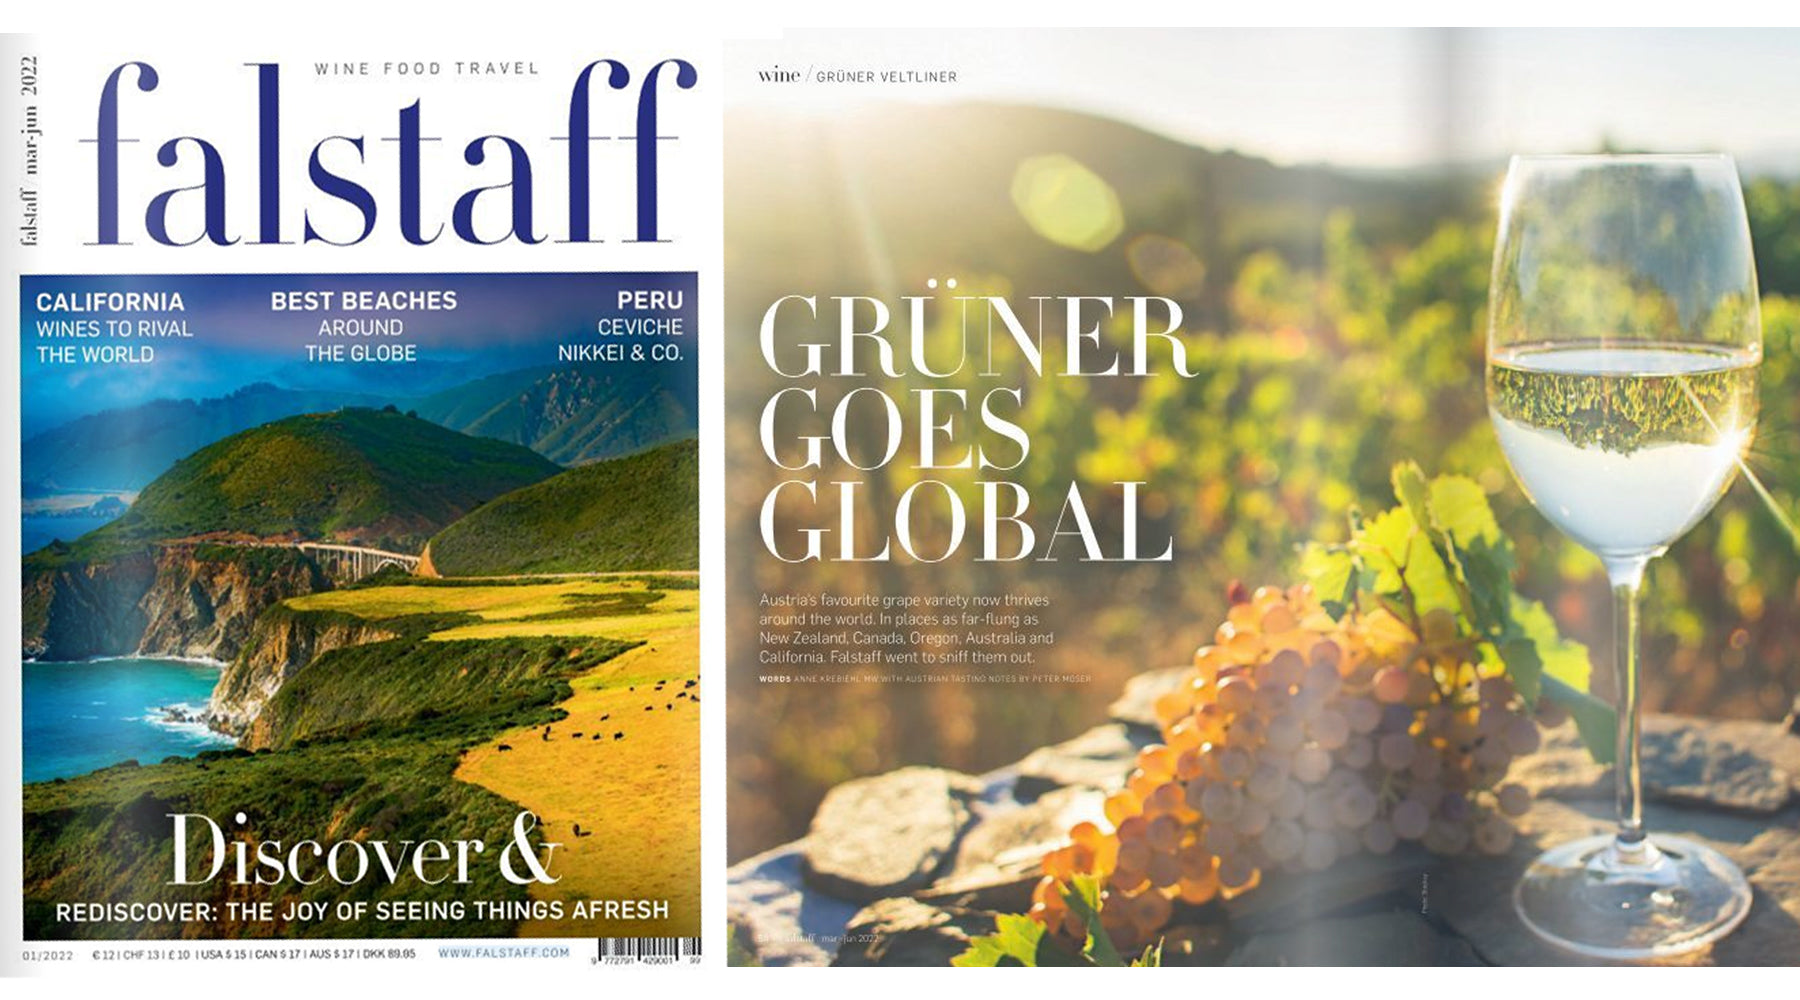 "Gruner Goes Global" featured in Falstaff Magazine